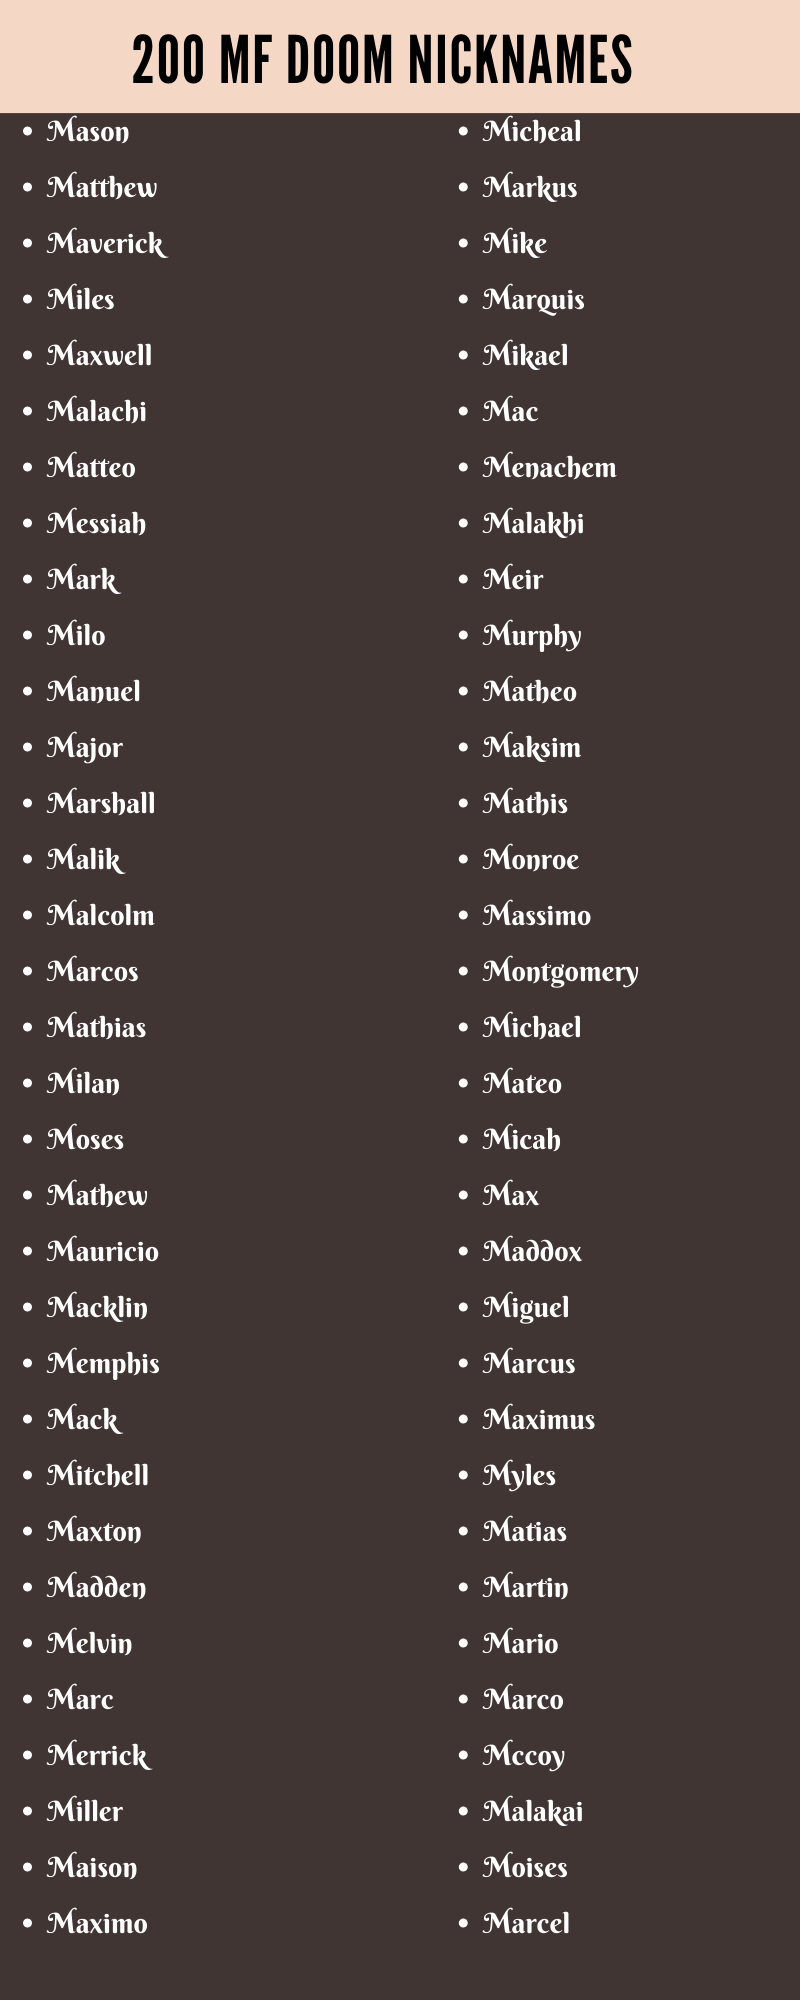 MF Doom Nicknames